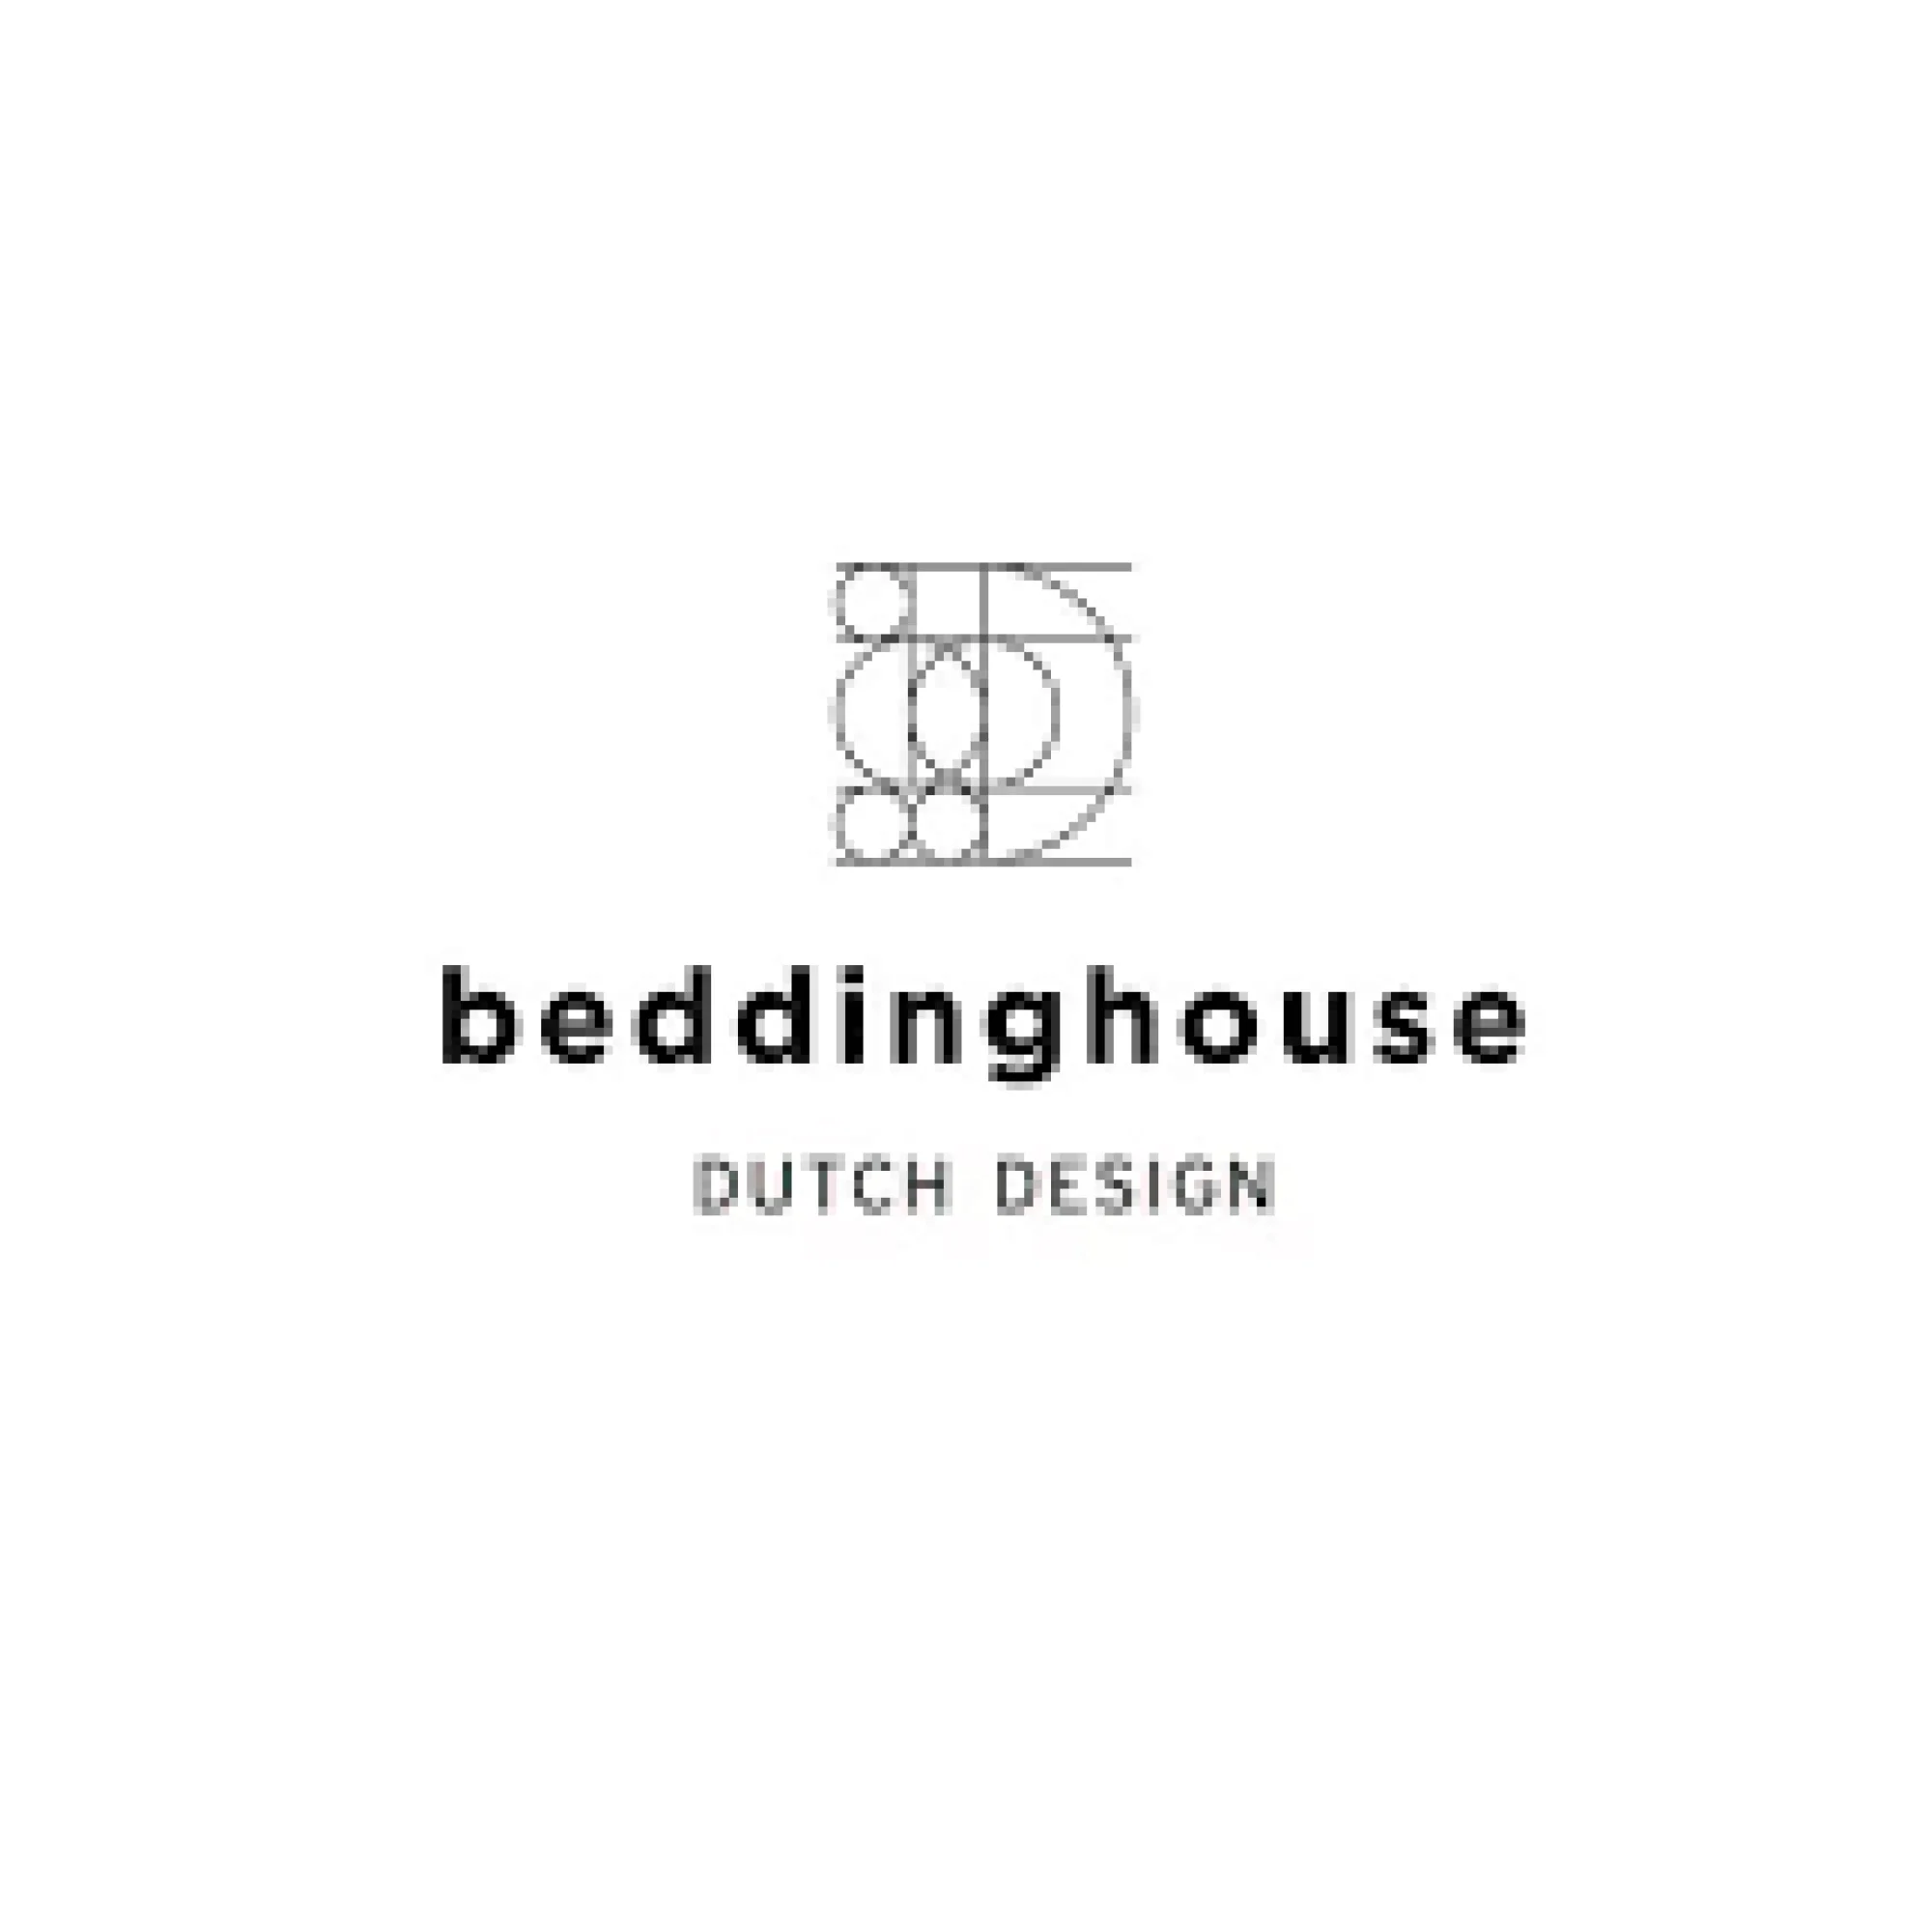 Dutch Design (Beddinghouse)